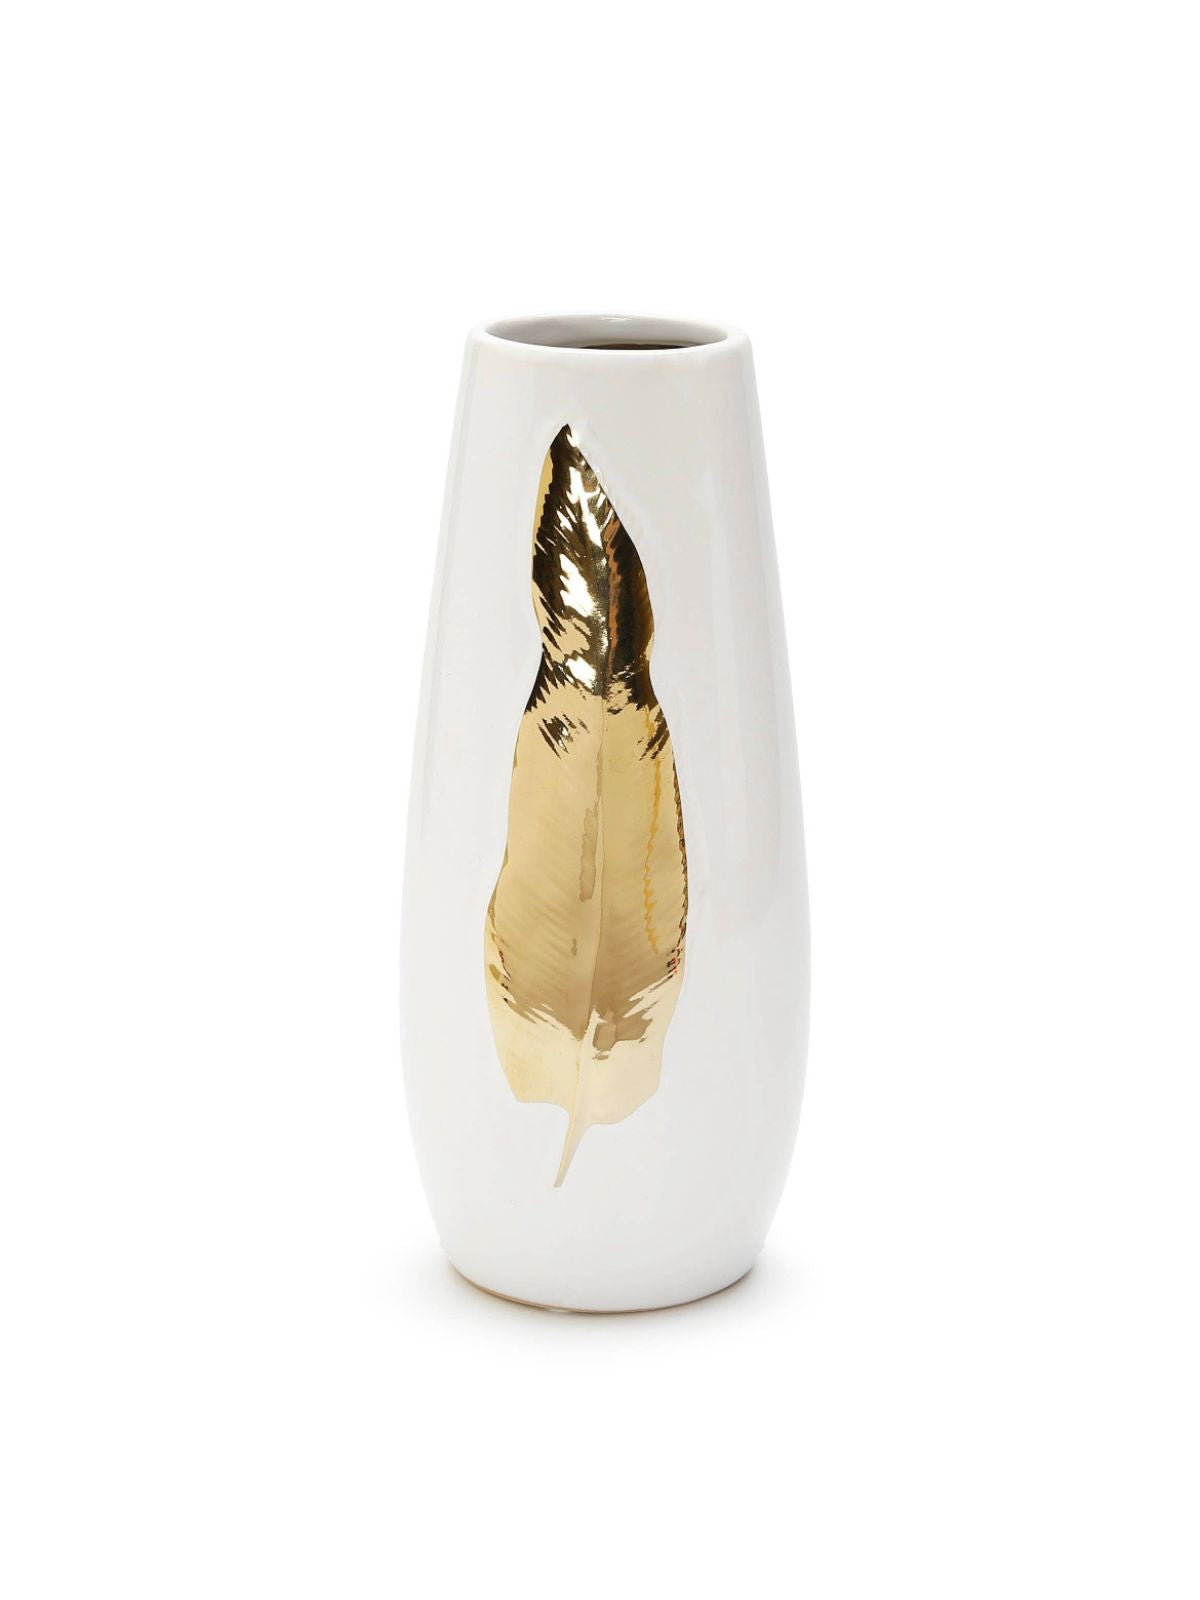 10H White Ceramic Decorative Vase with Gold Leaf Design - KYA Home Decor